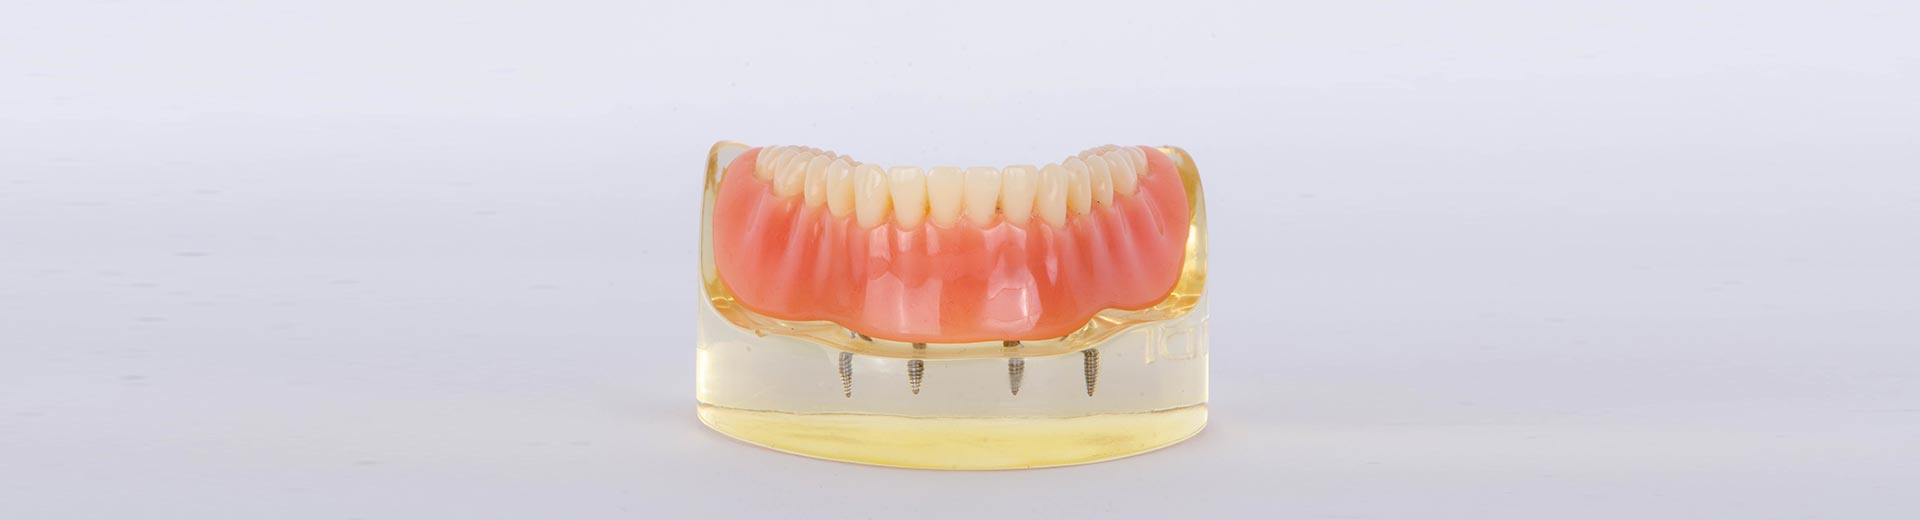 Implant retained dentures